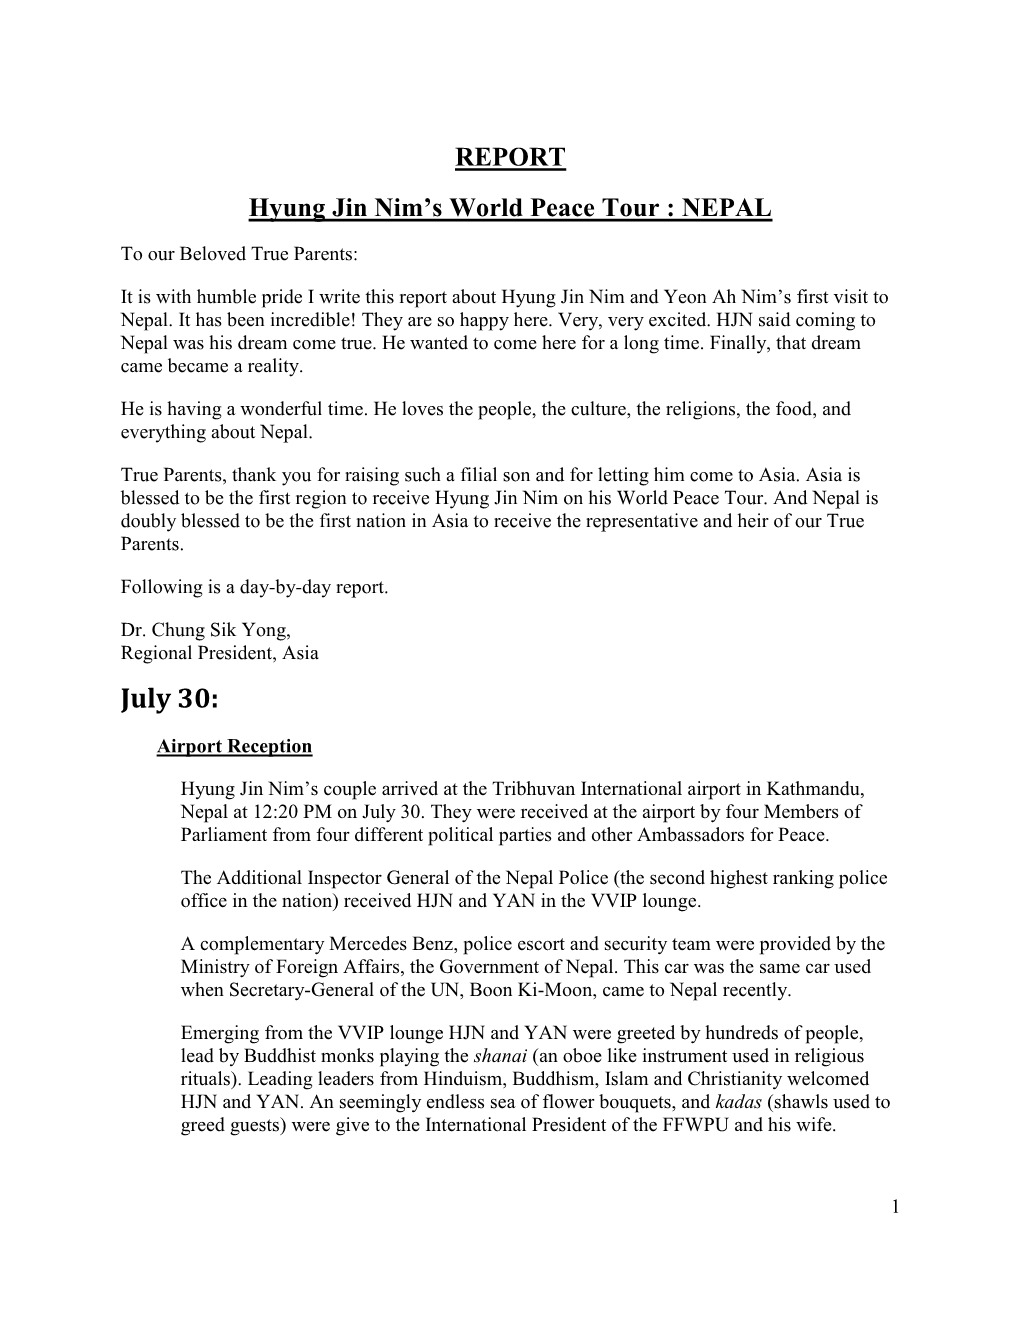 Report on Hyung Jin Nim's World Peace Tour: Nepal